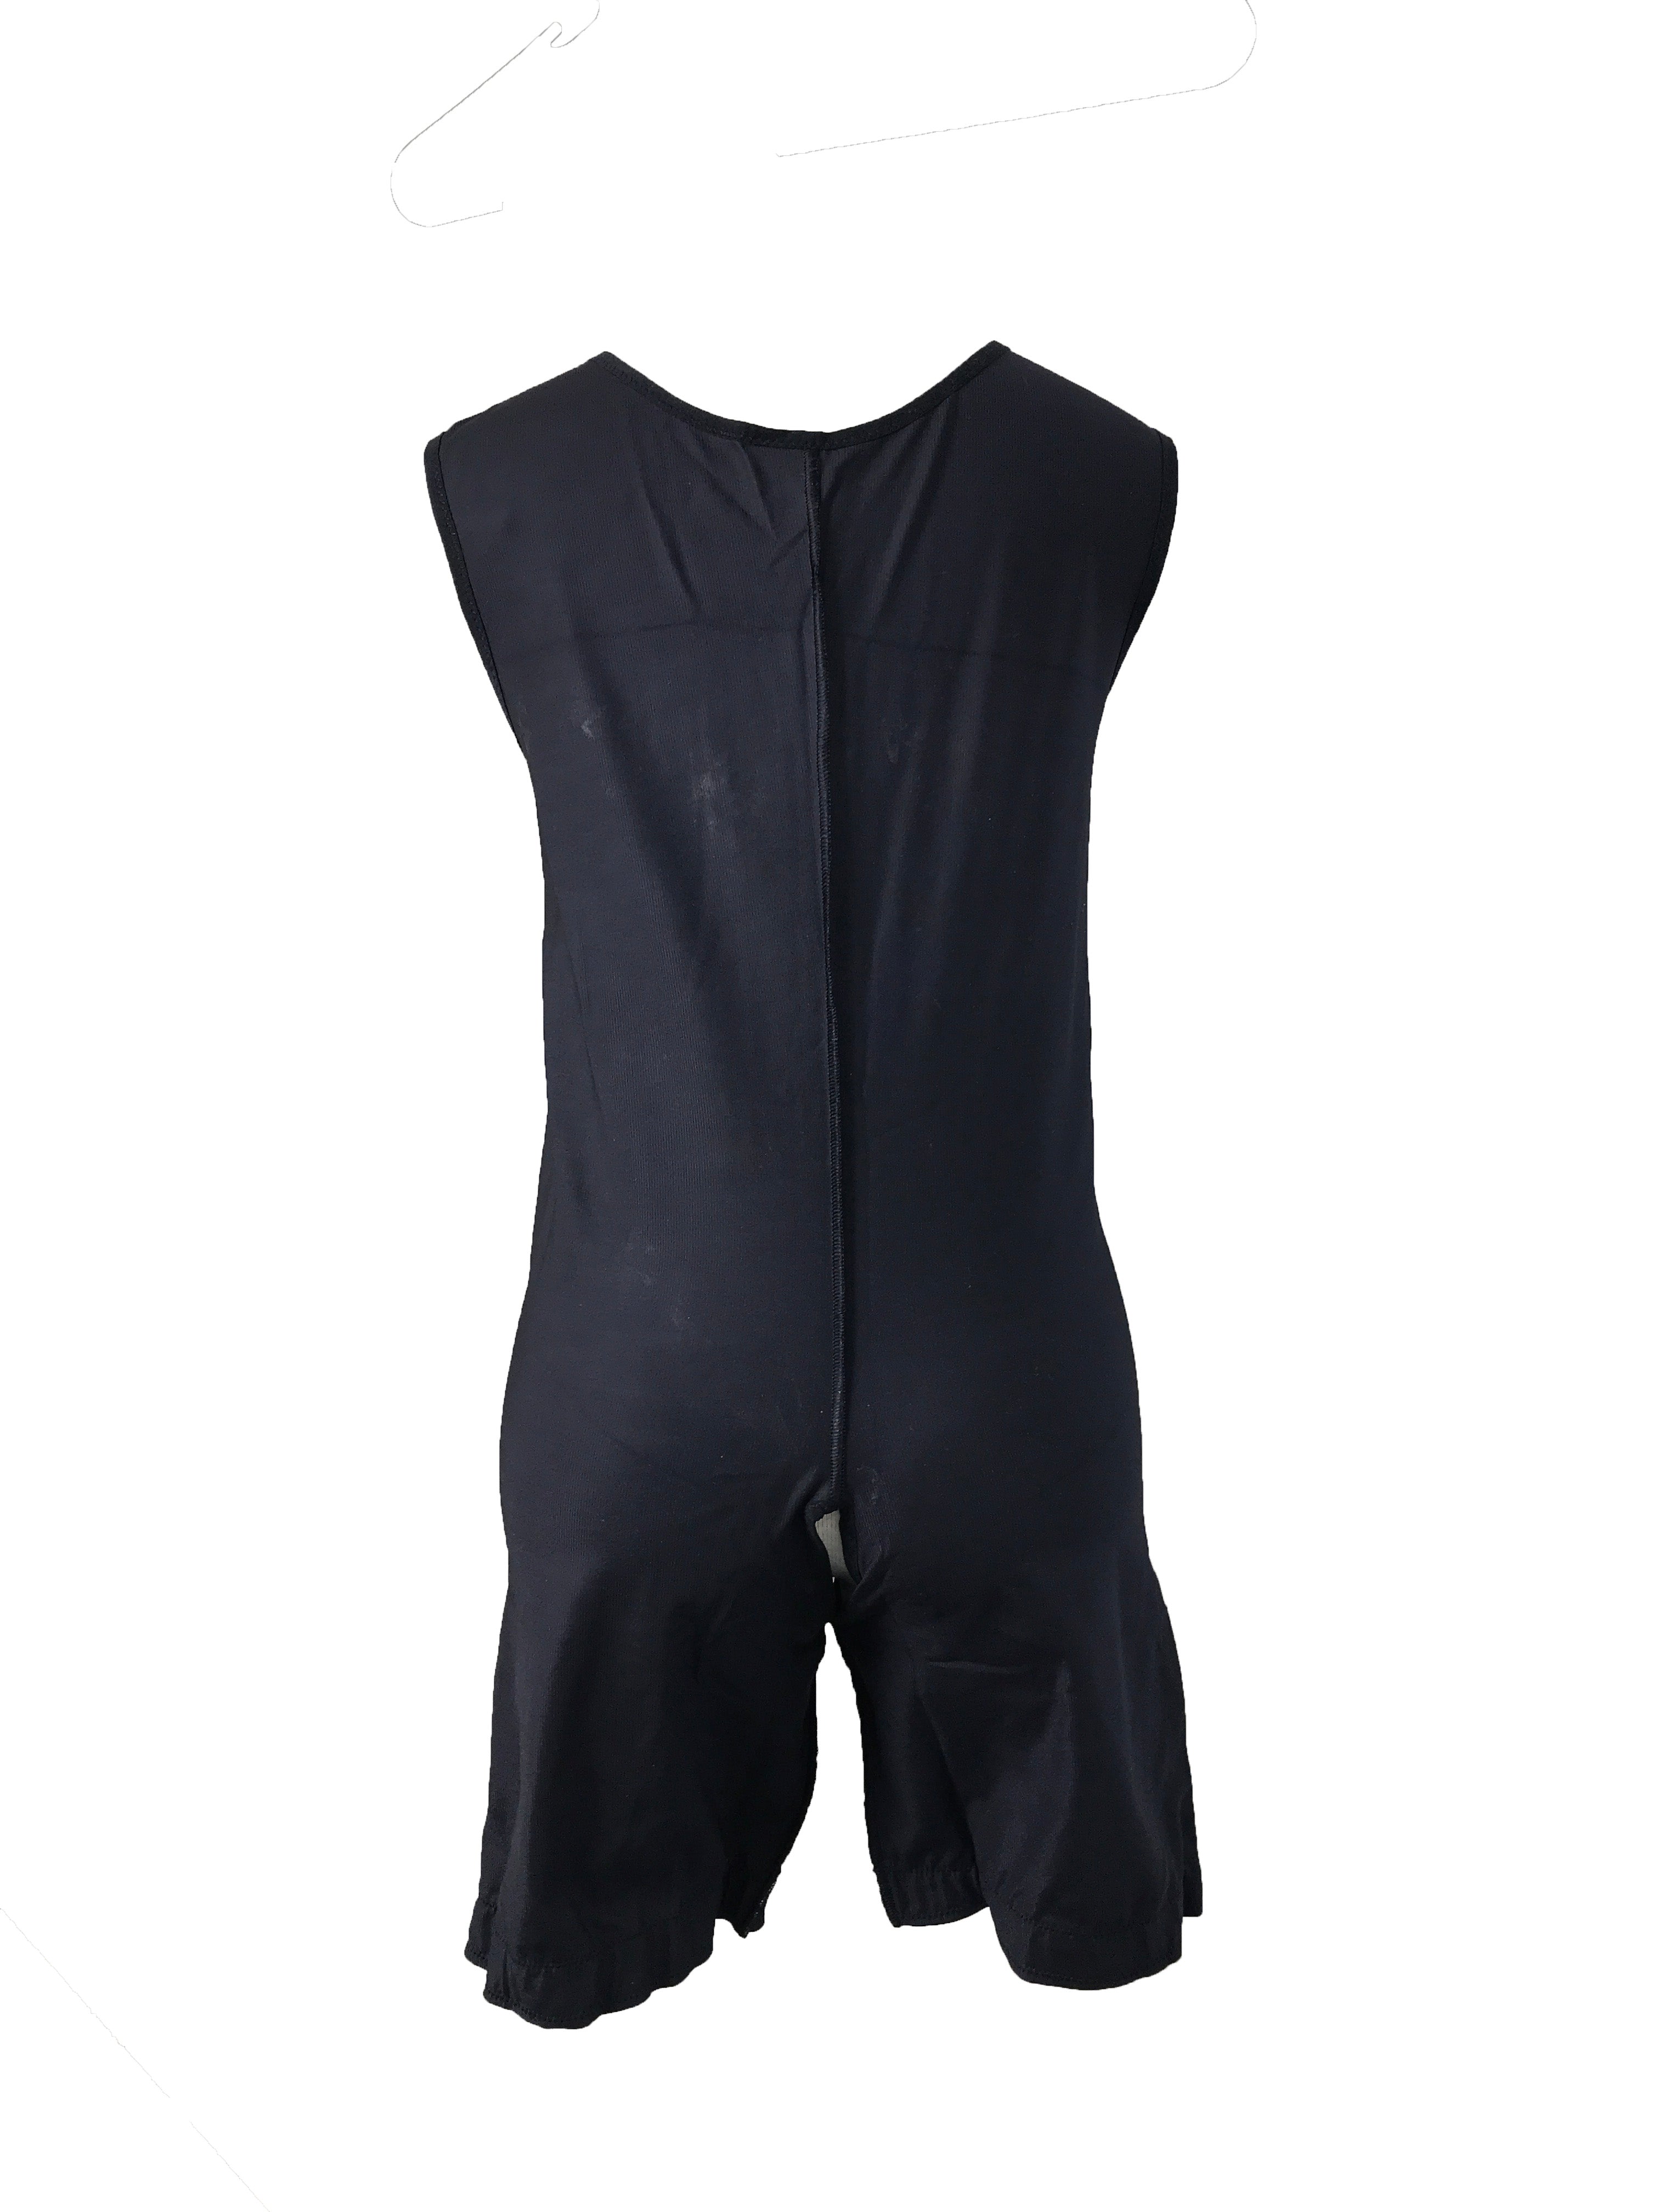 Marena ComfortWear Compression and Support Garment Black Bodysuit Men' –  MSU Surplus Store